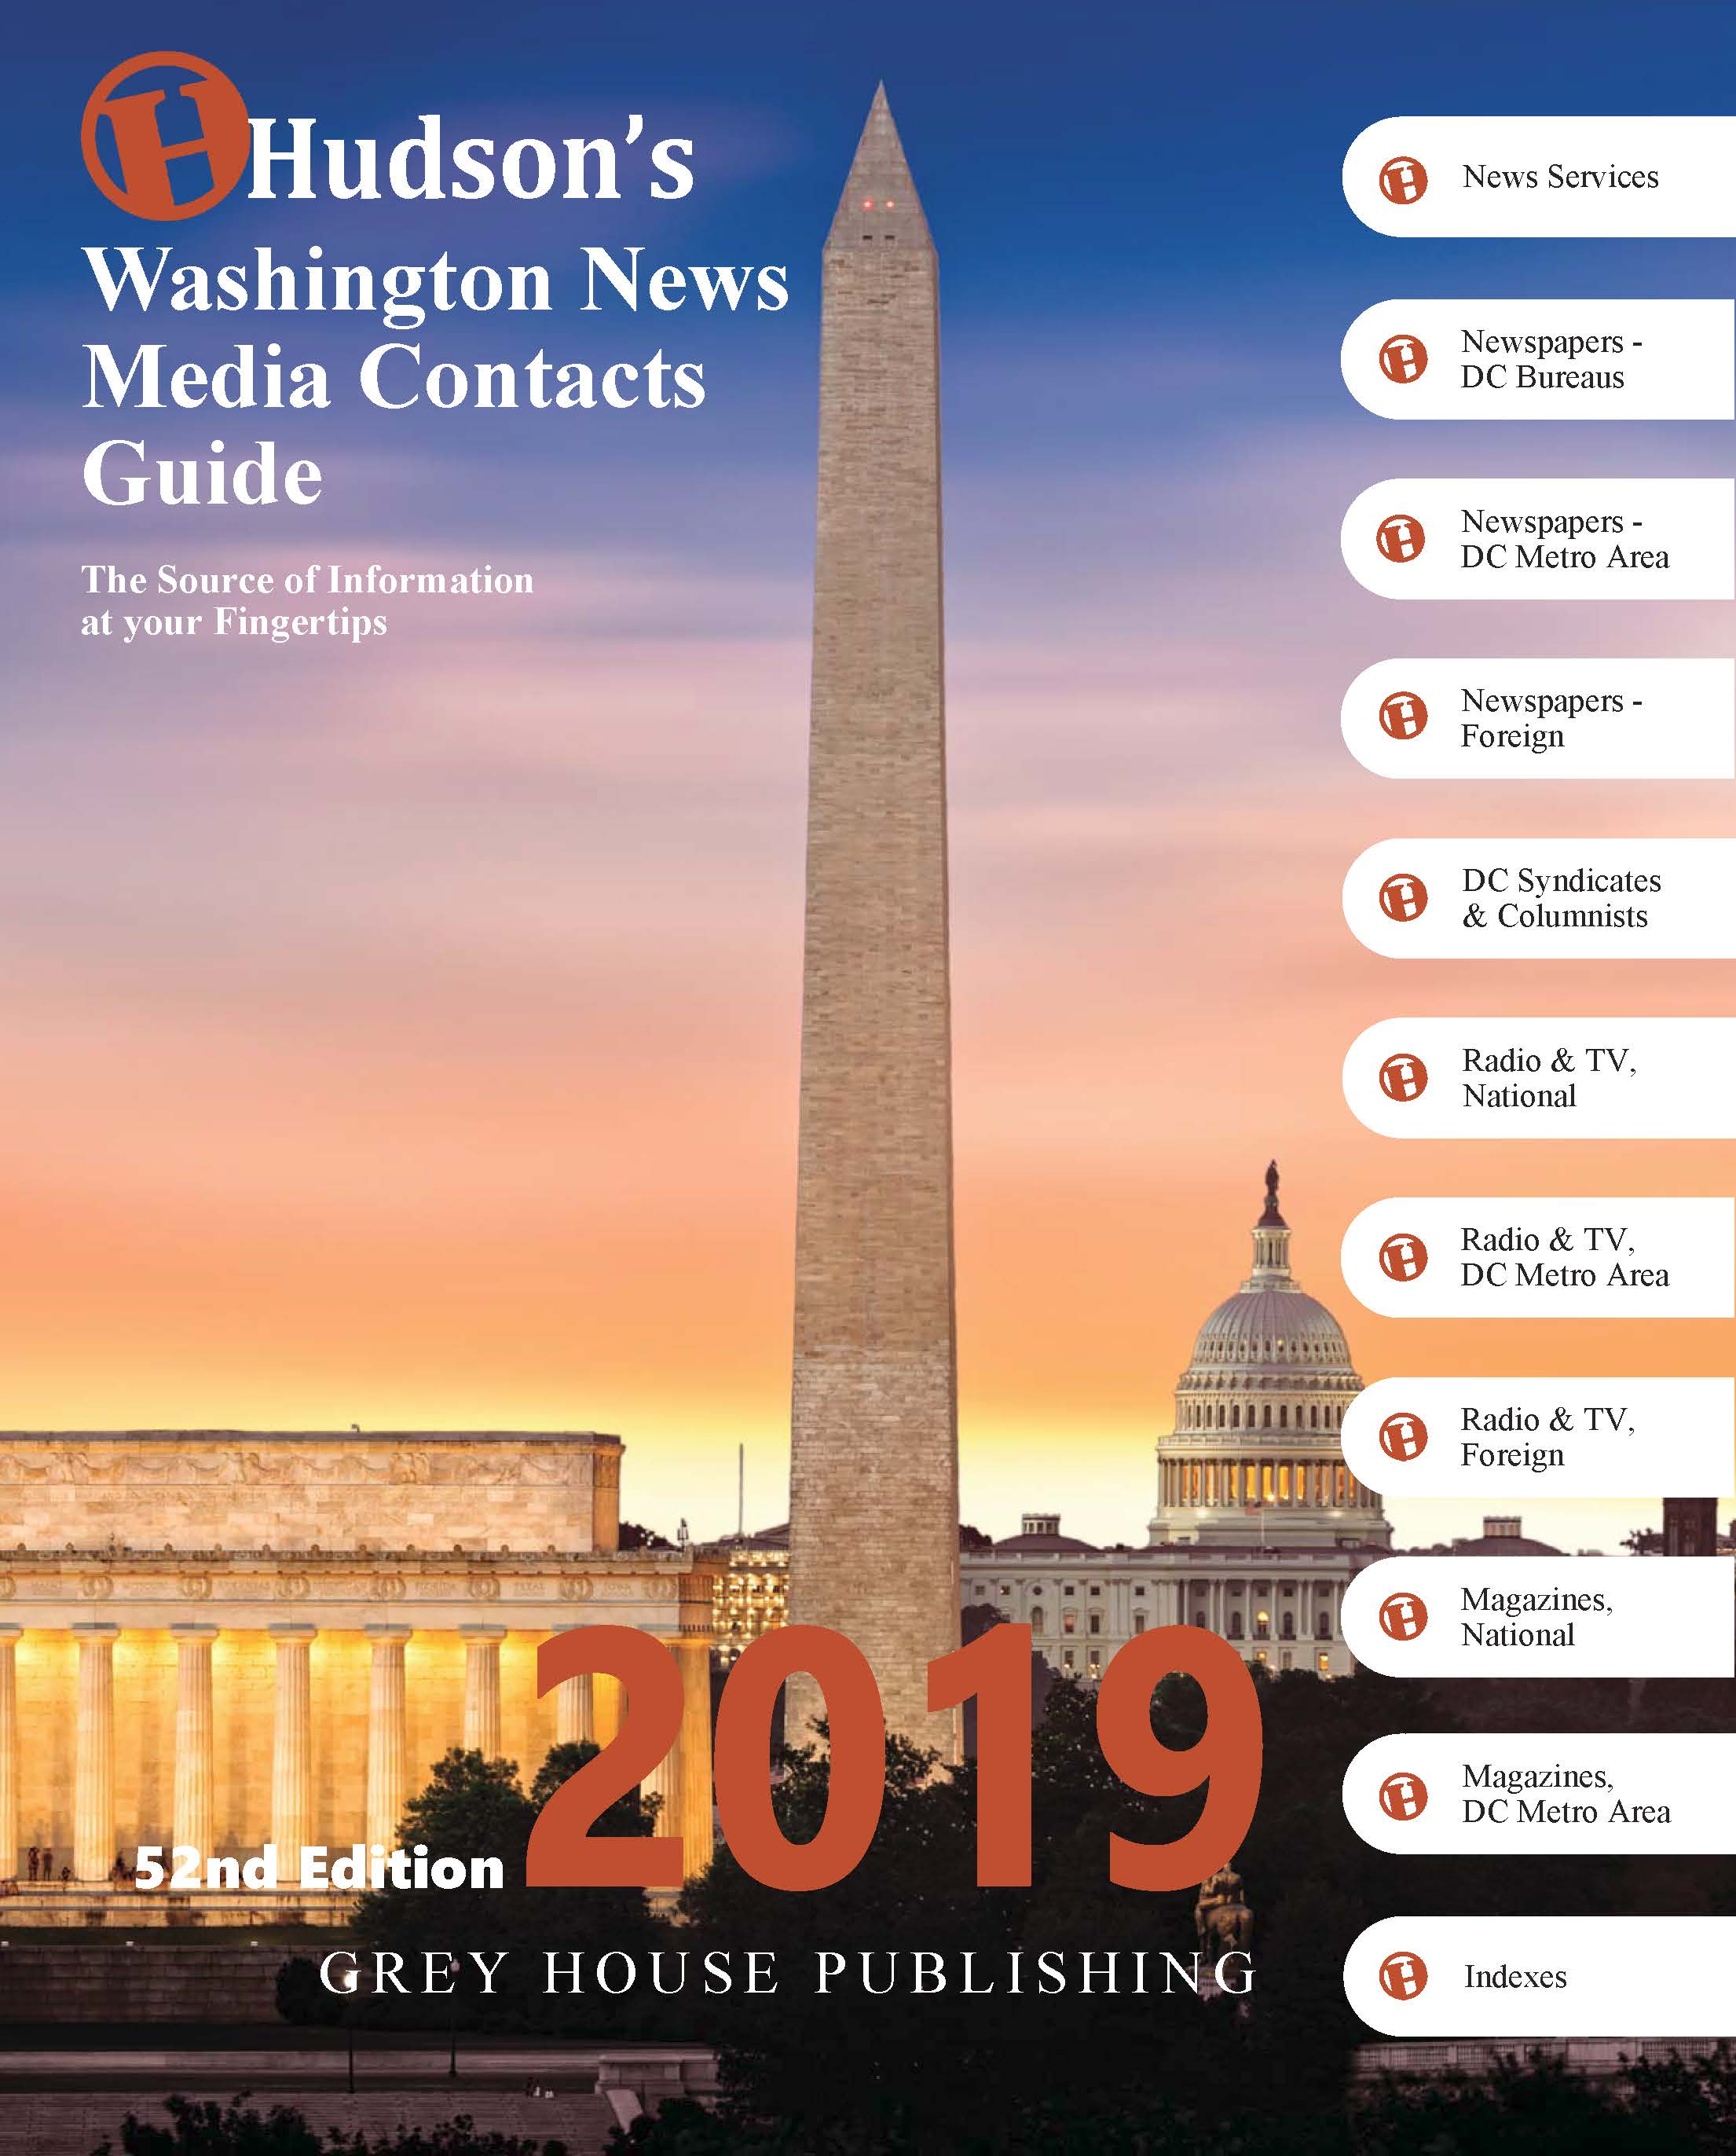 Hudson's Washington News Media Contacts Guide